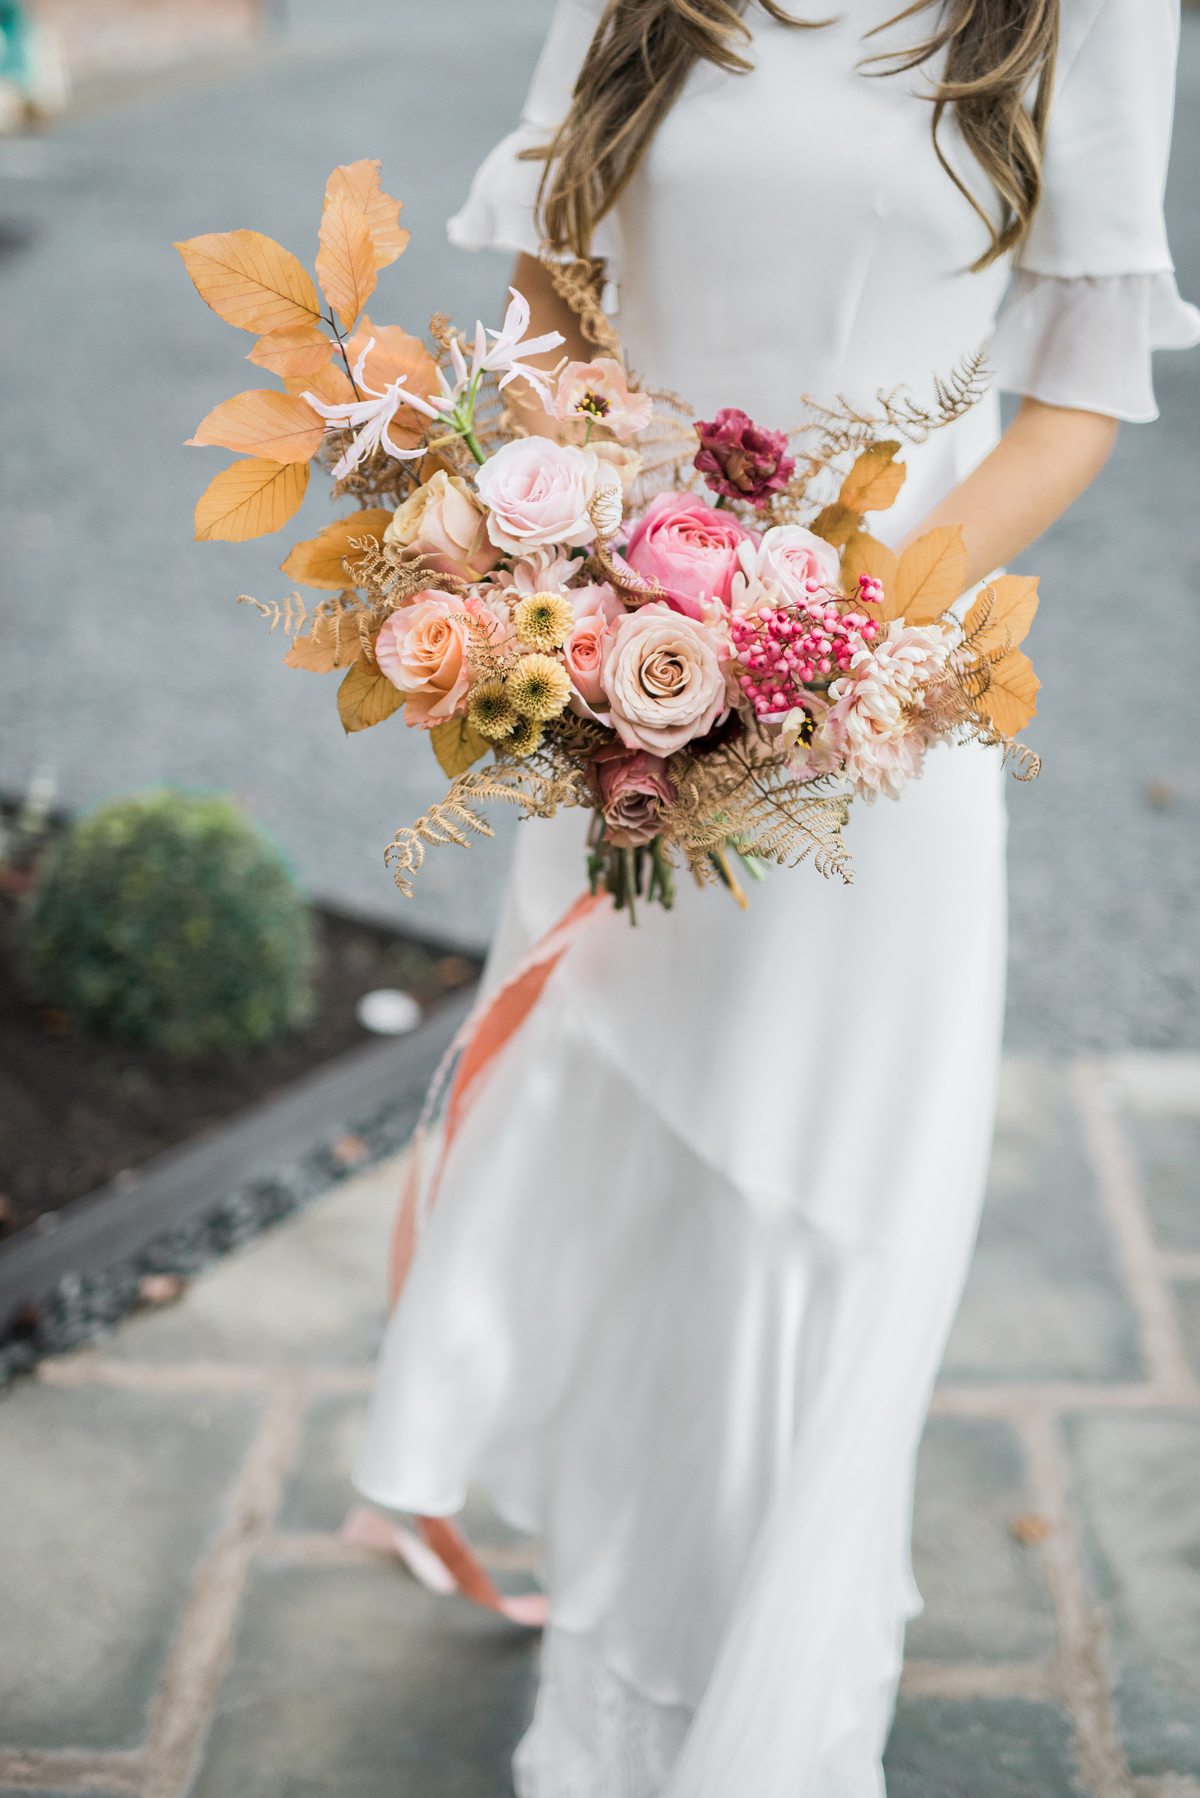 191 Elegant Autumn Wedding Flowers Decor Inspiration